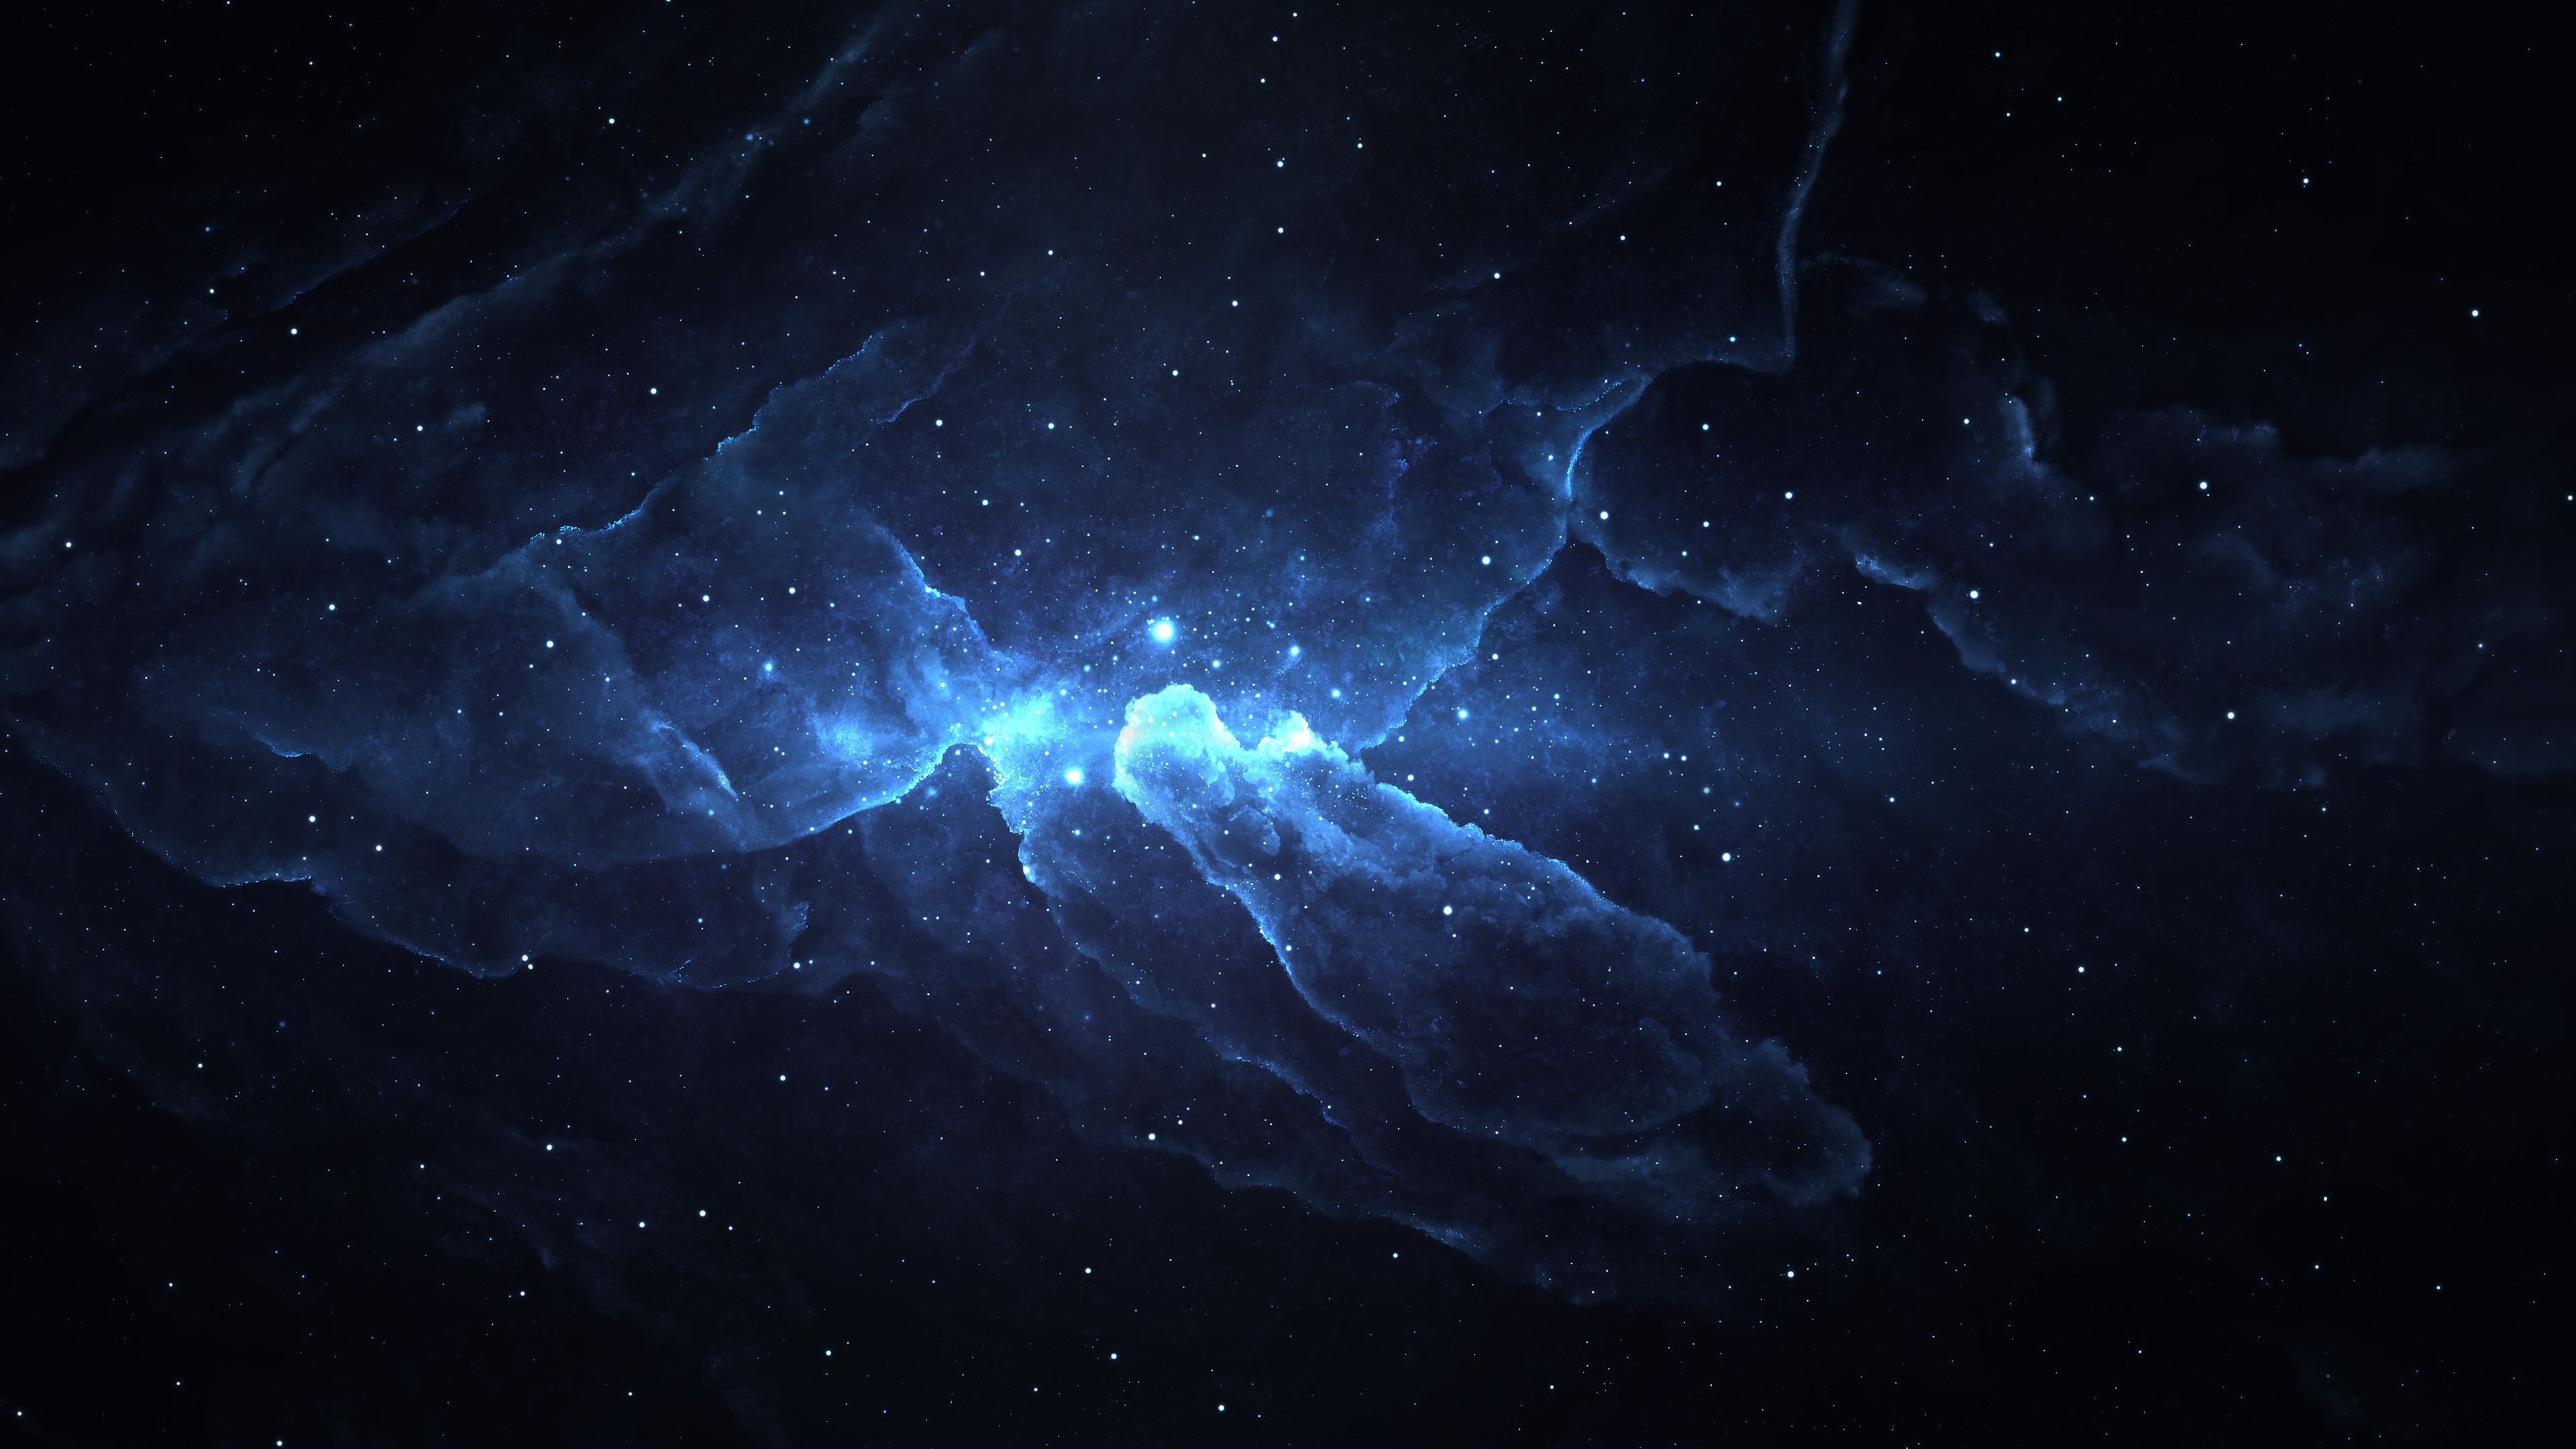 Atlantis Nebula Space 4k, HD Digital Universe, 4k Wallpaper, Image, Background, Photo and Picture